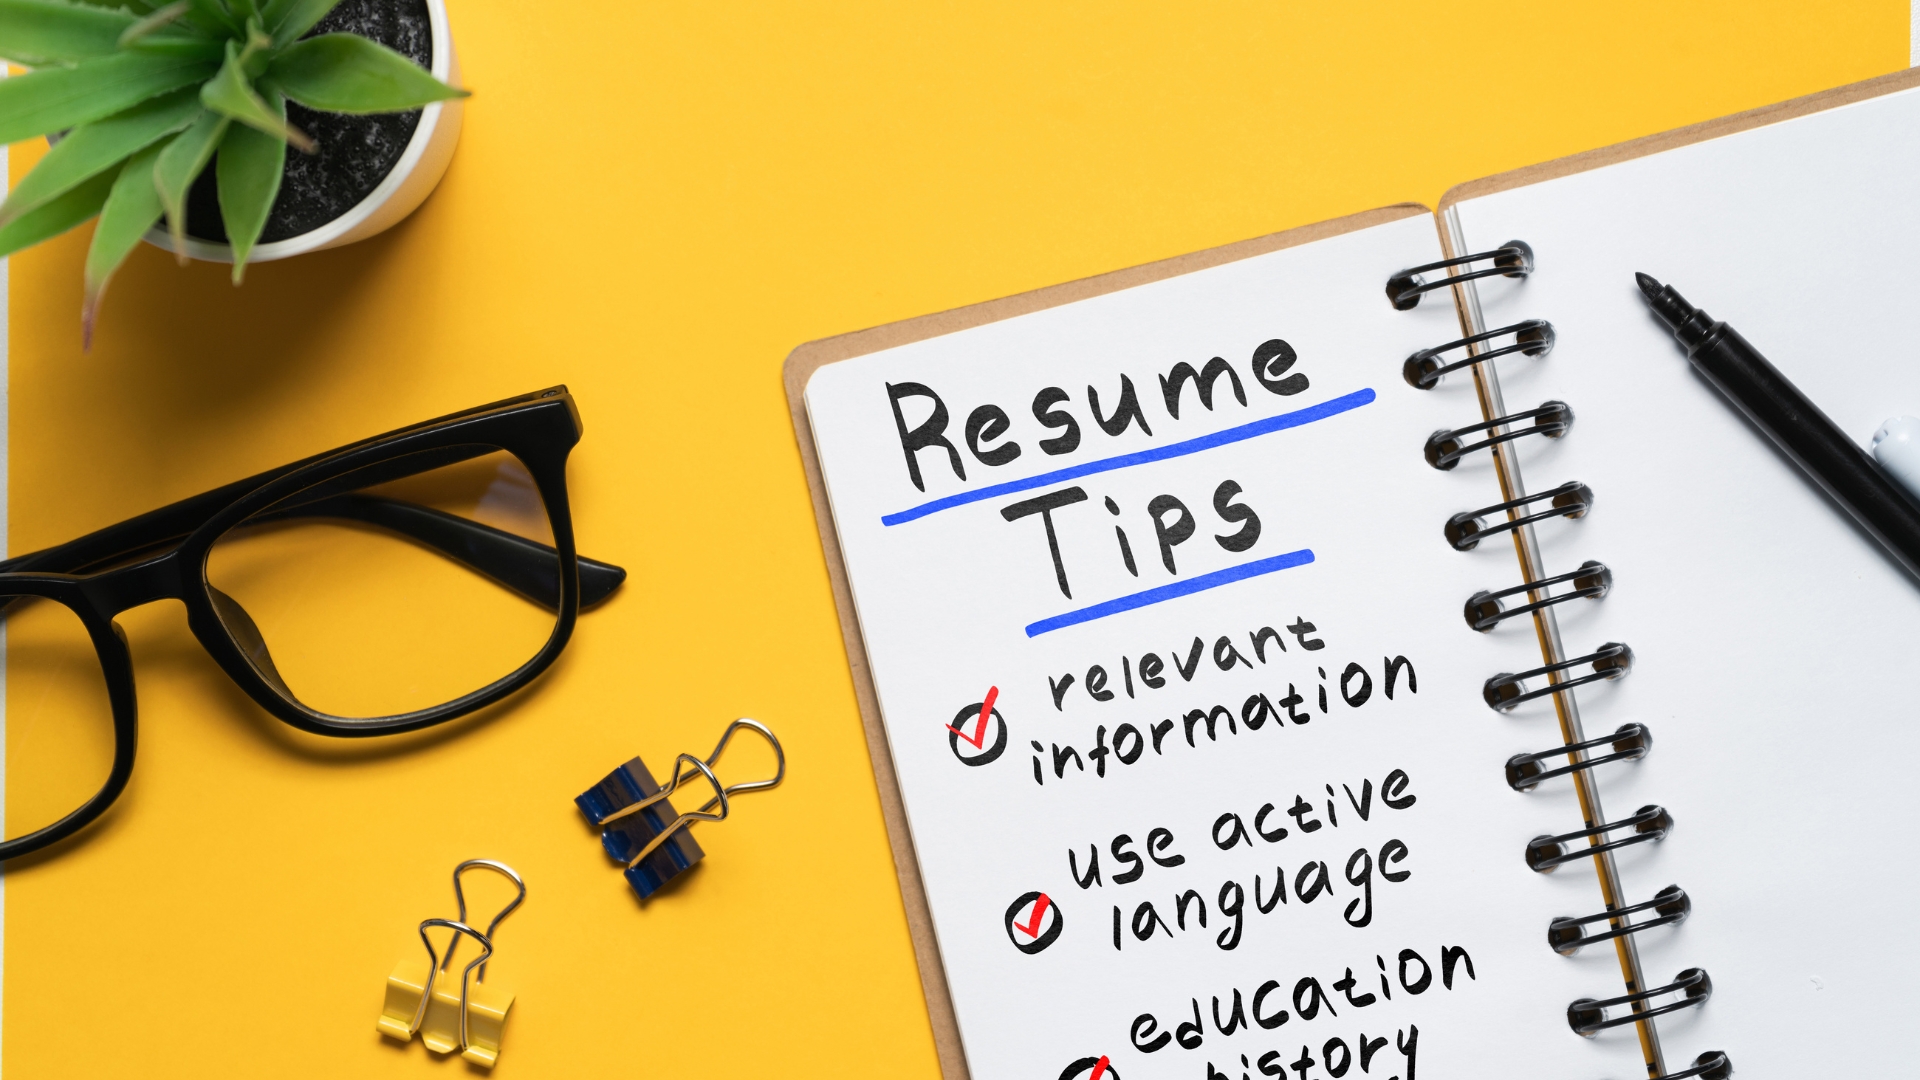 10 Tips to Write an Impressive Resume